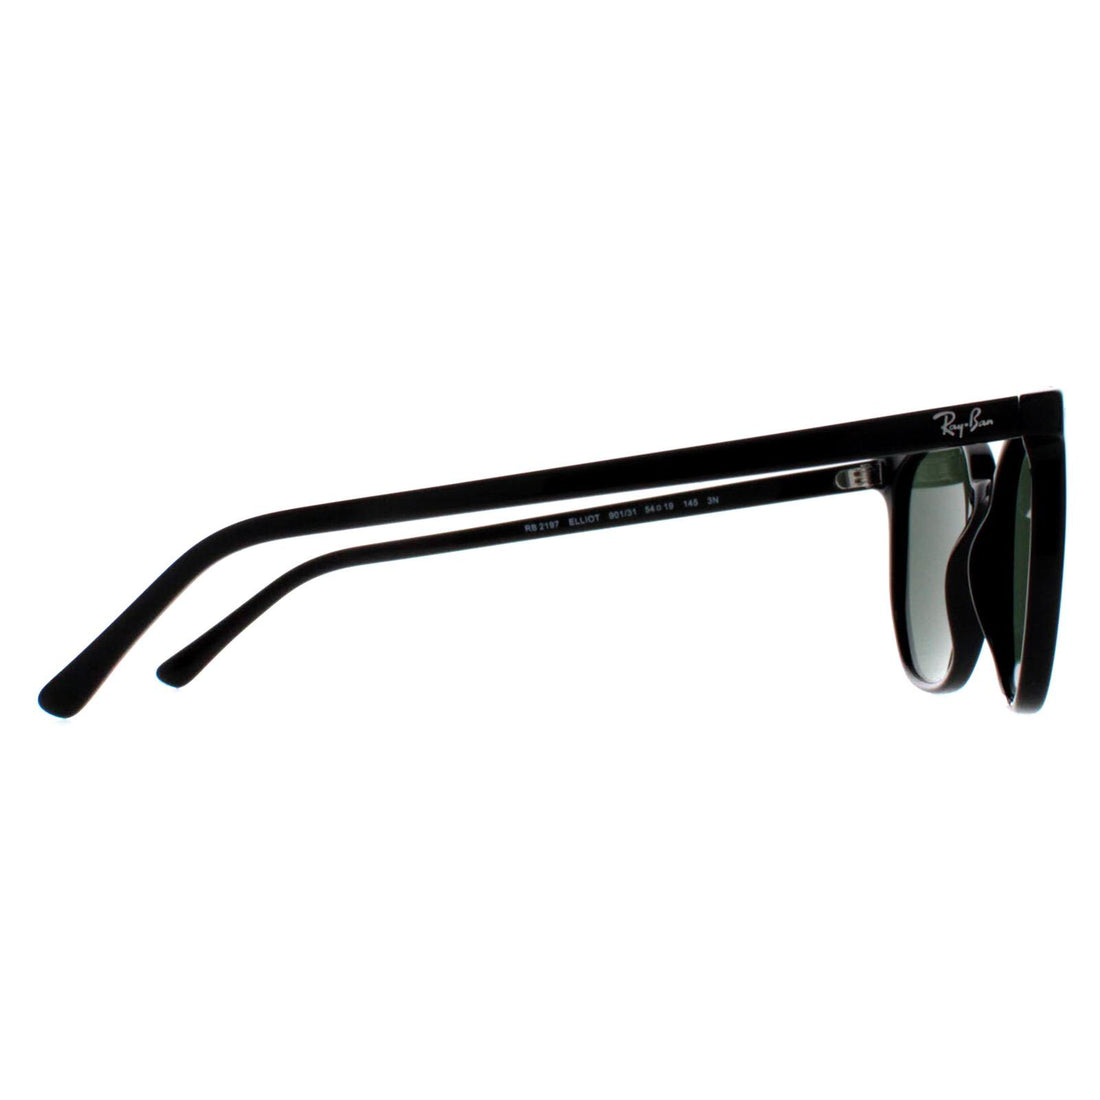 Ray-Ban RB2197 Elliot Sunglasses